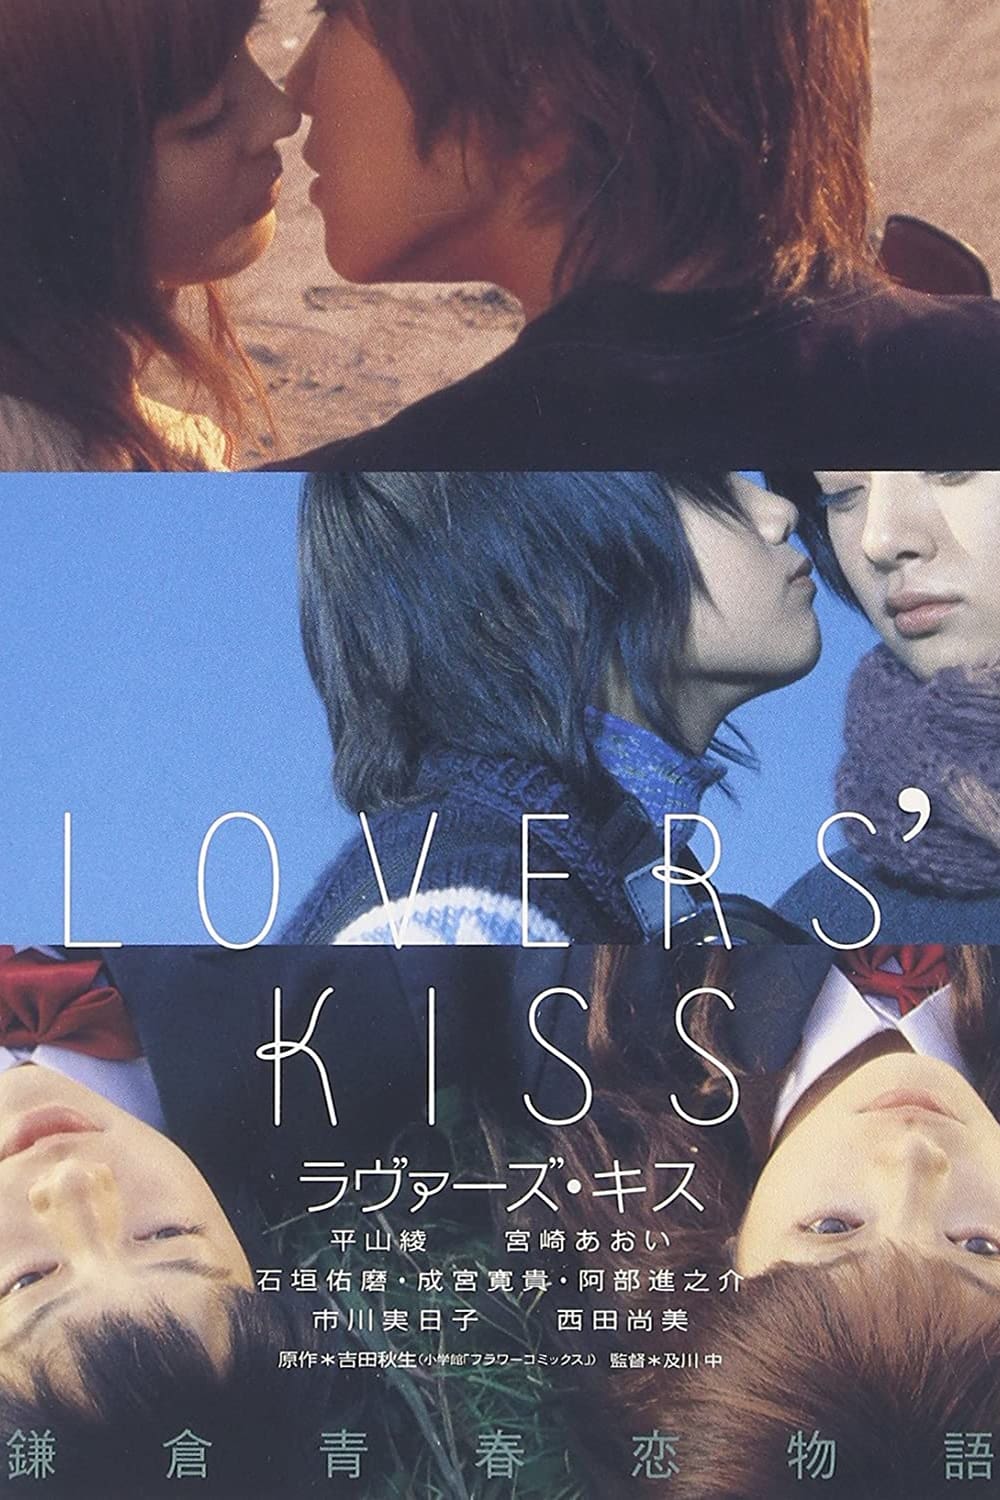 Lovers' Kiss